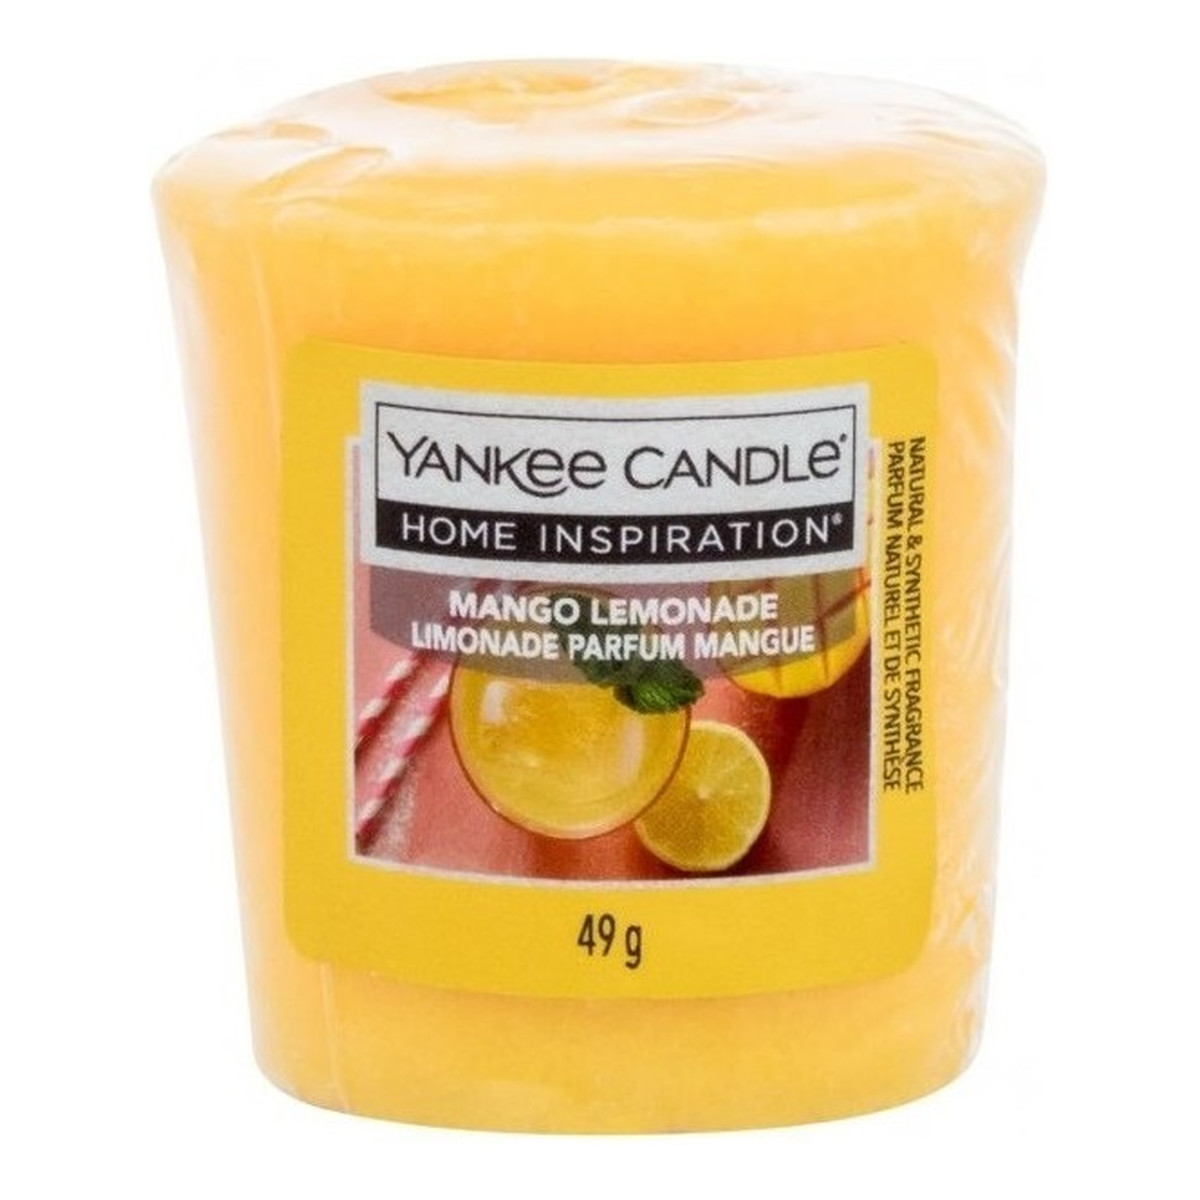 Yankee Candle Home Inspiration Świeca zapachowa Mango Lemonade 49g